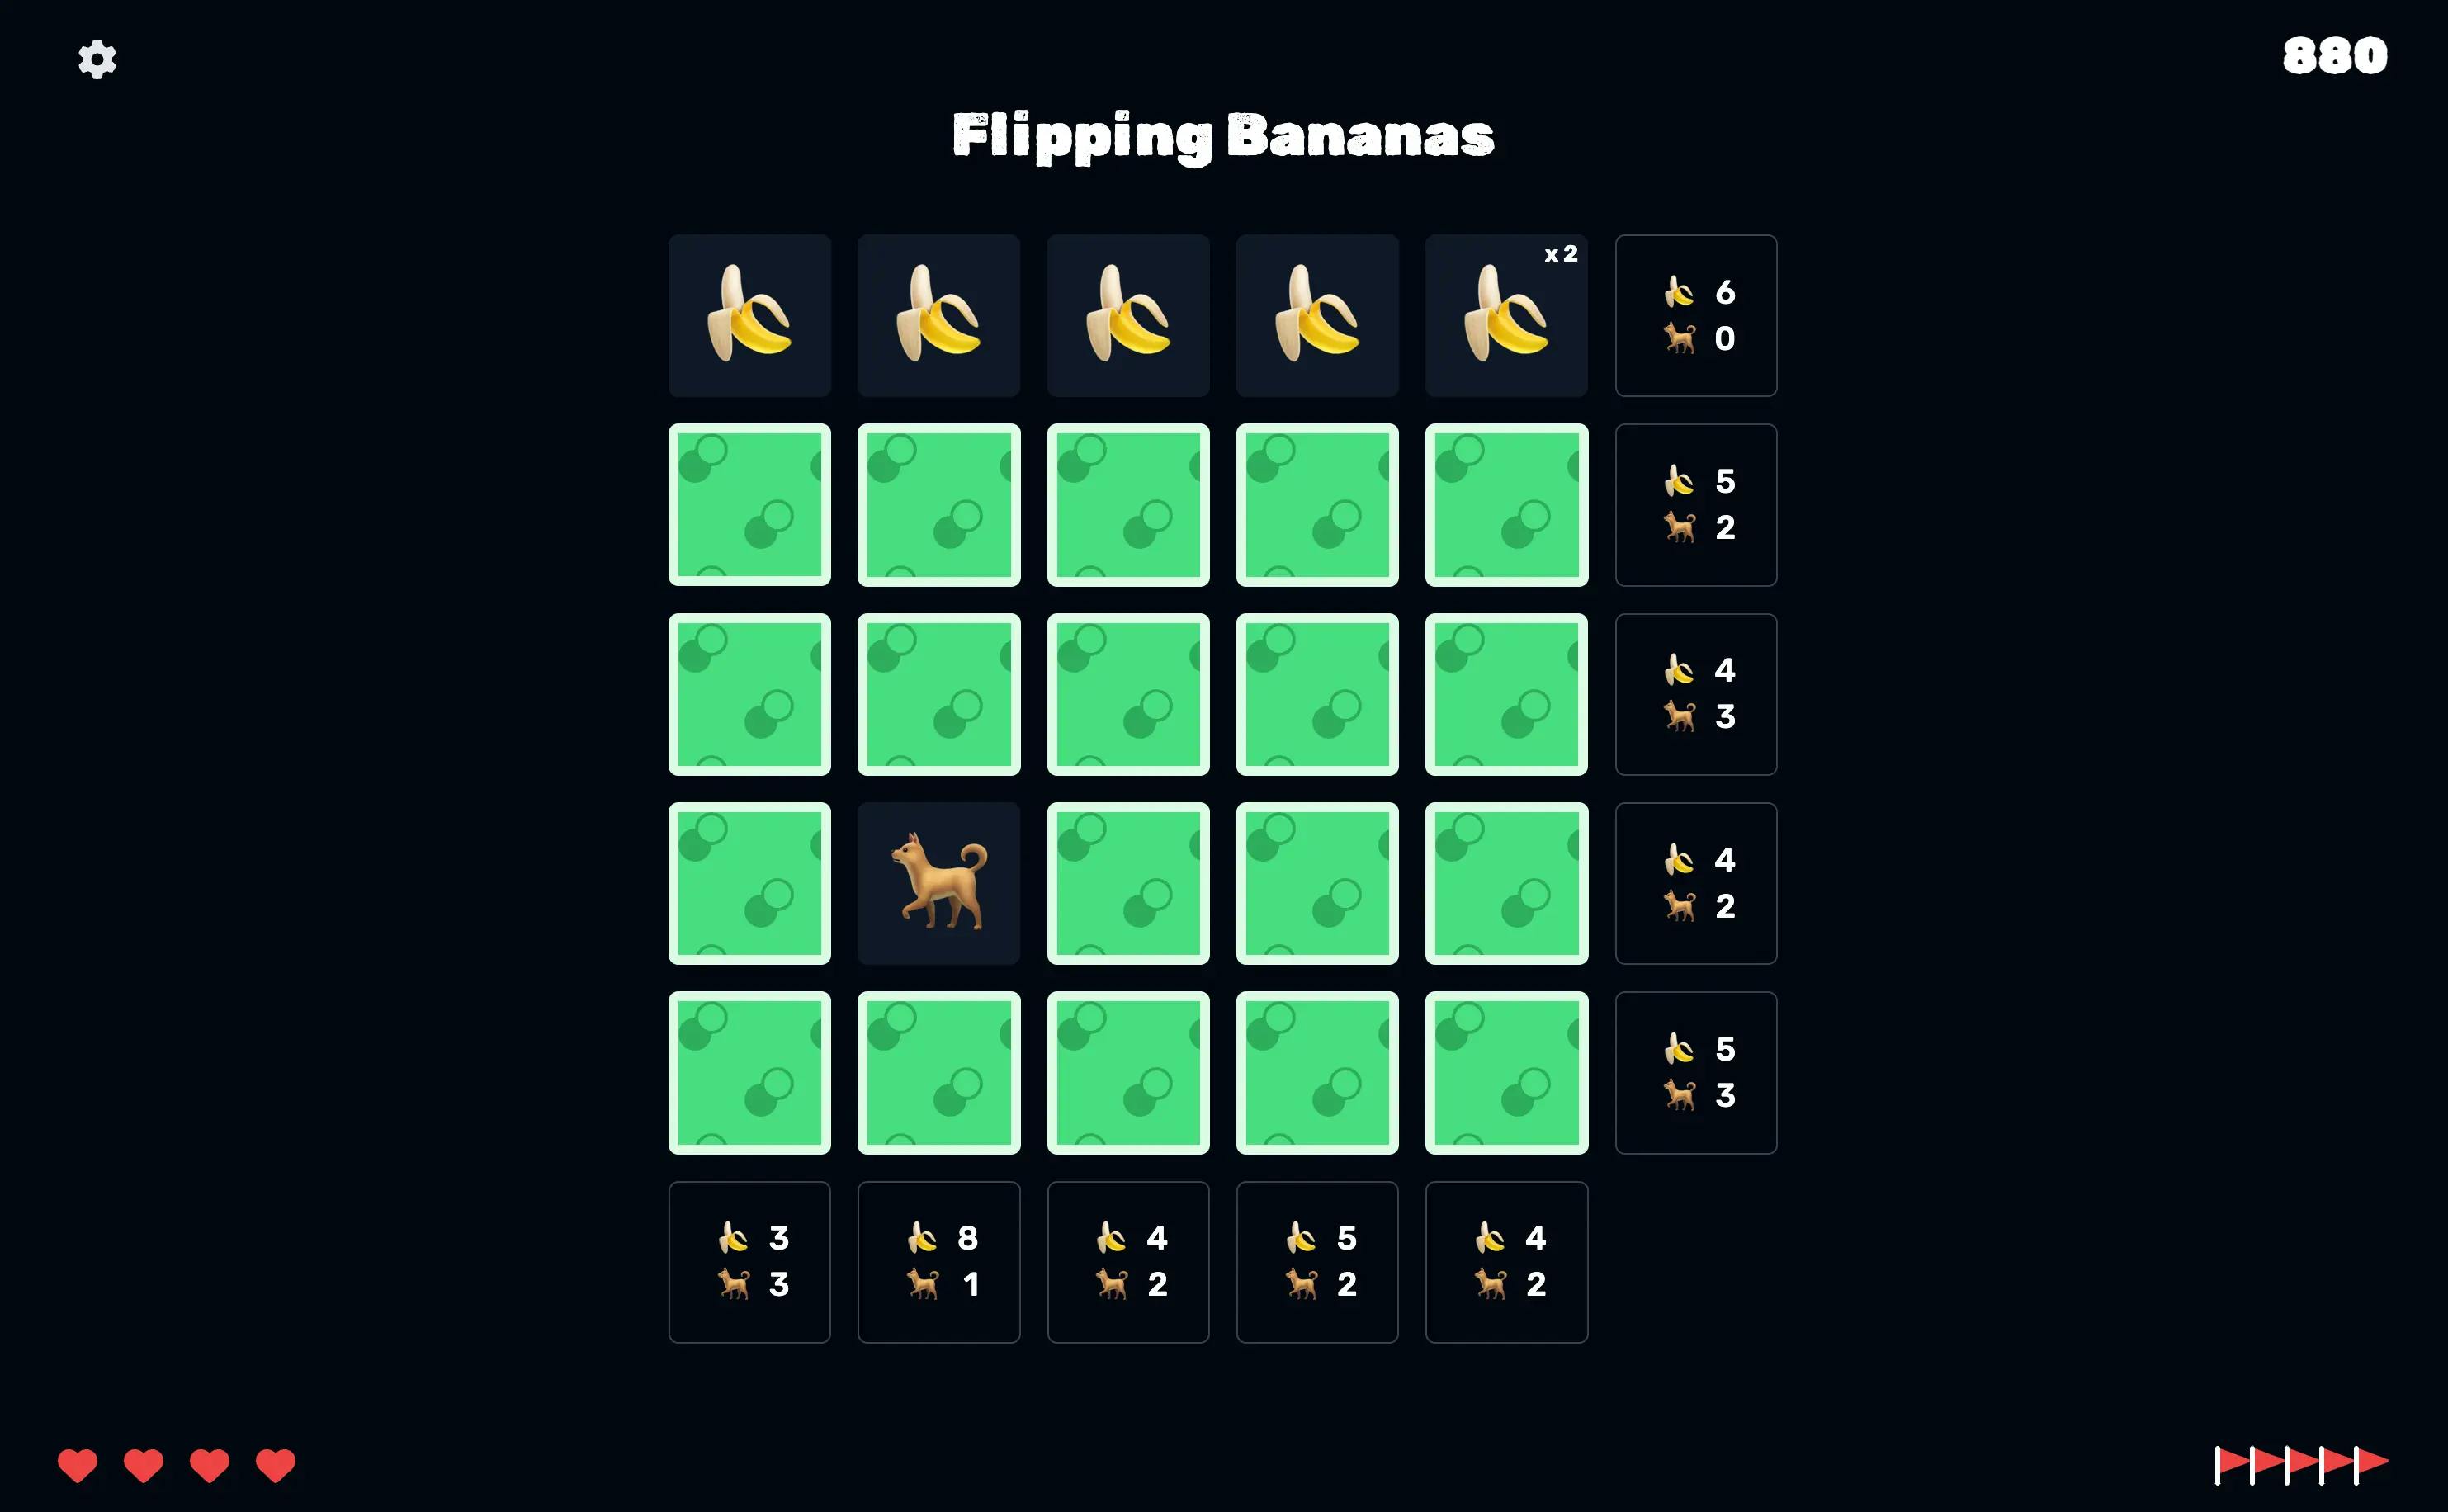 screenshot of flipping bananas gameboard